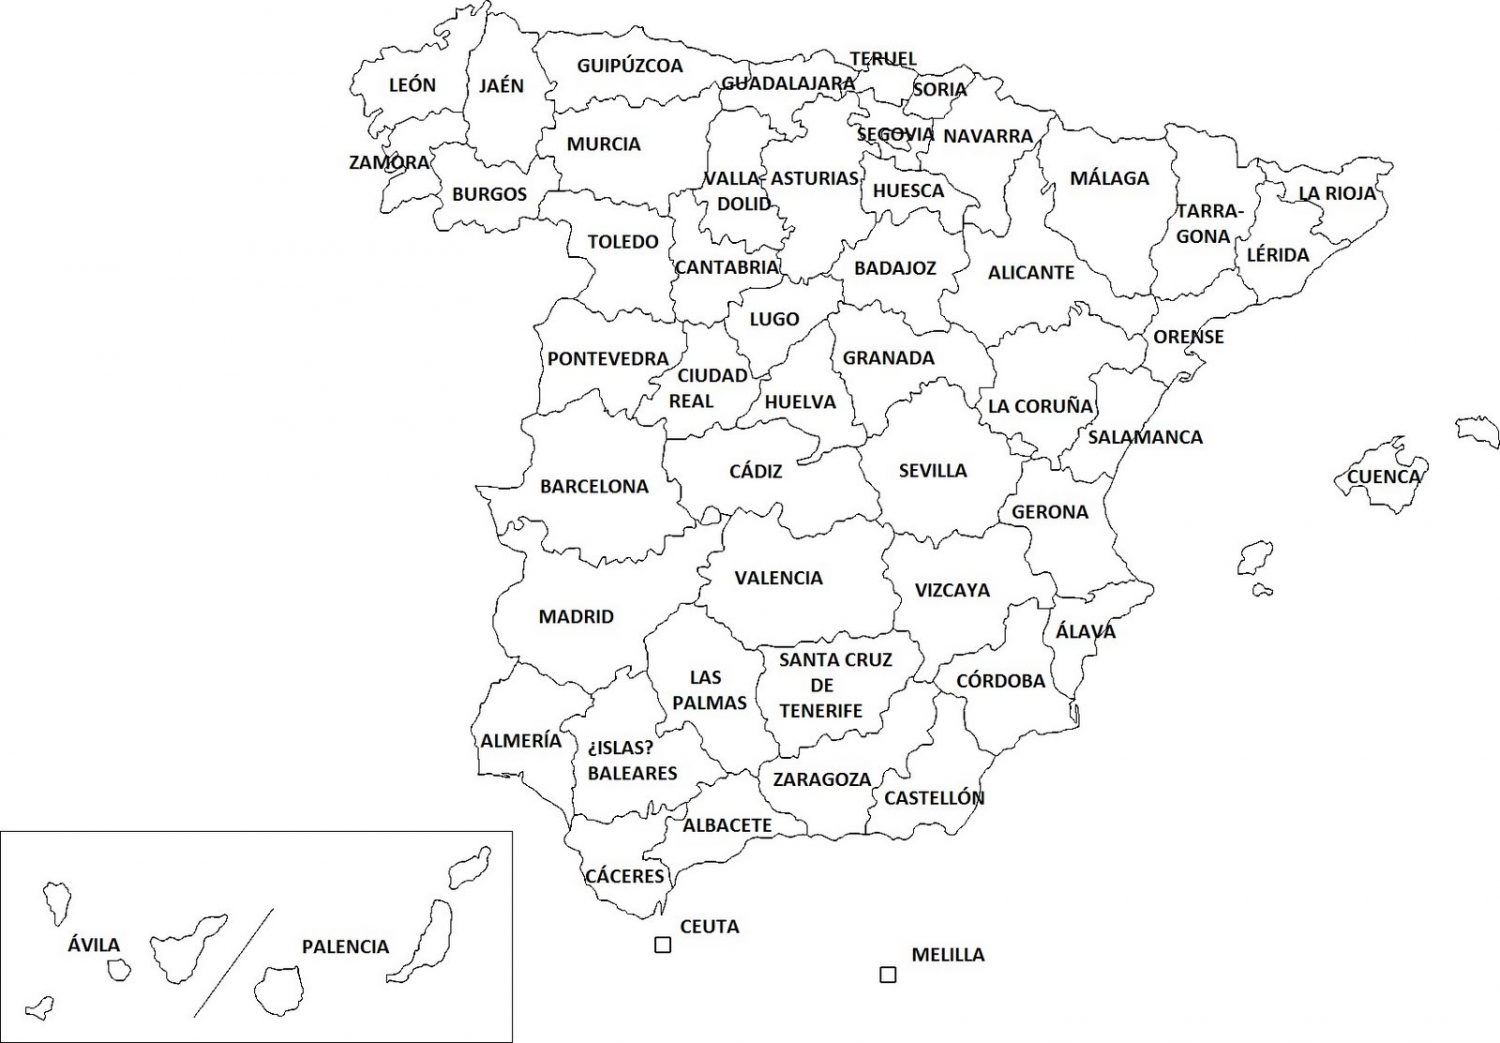 mapa-provincial-espac3b1a-ordenado-por-poblacic3b3n